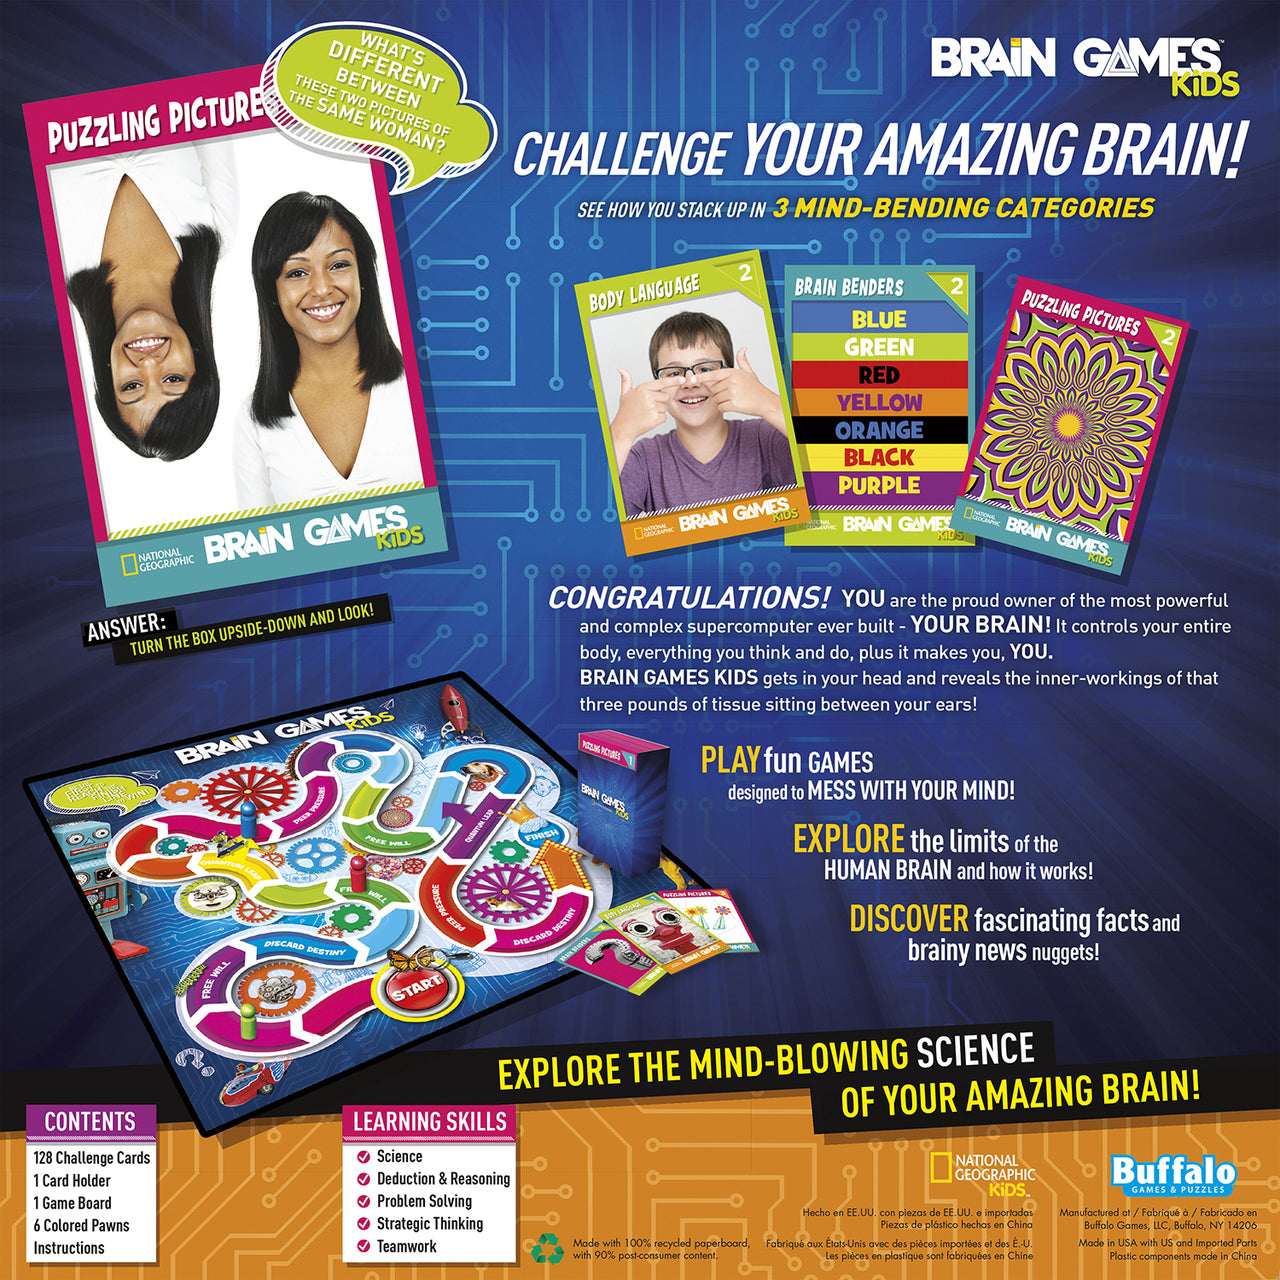 Rental - Brain Games Kids